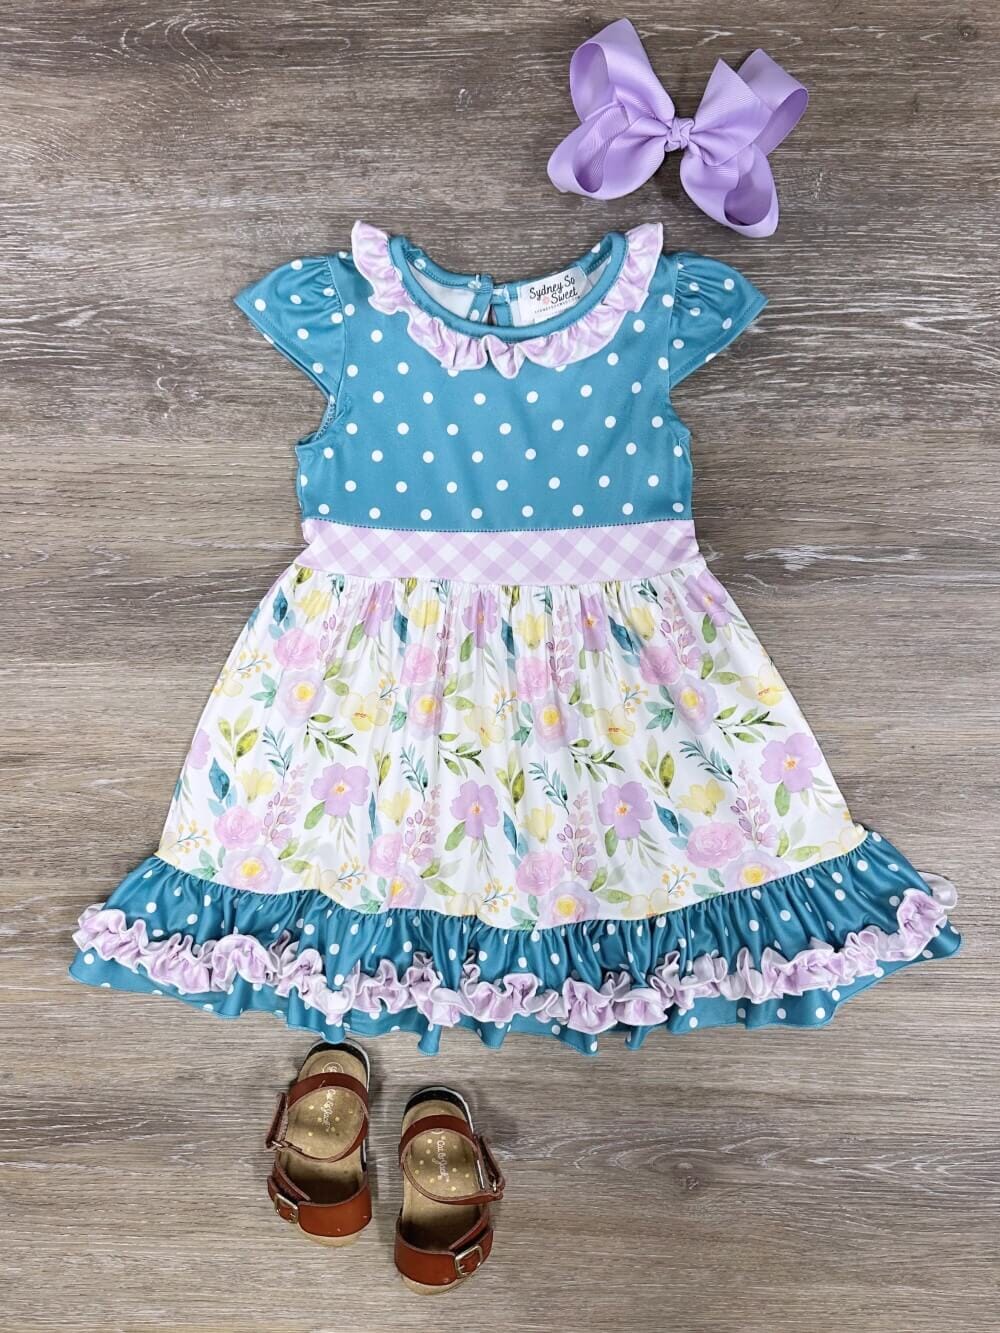 Spring Dream Polka Dot & Floral Girls Dress - Sydney So Sweet